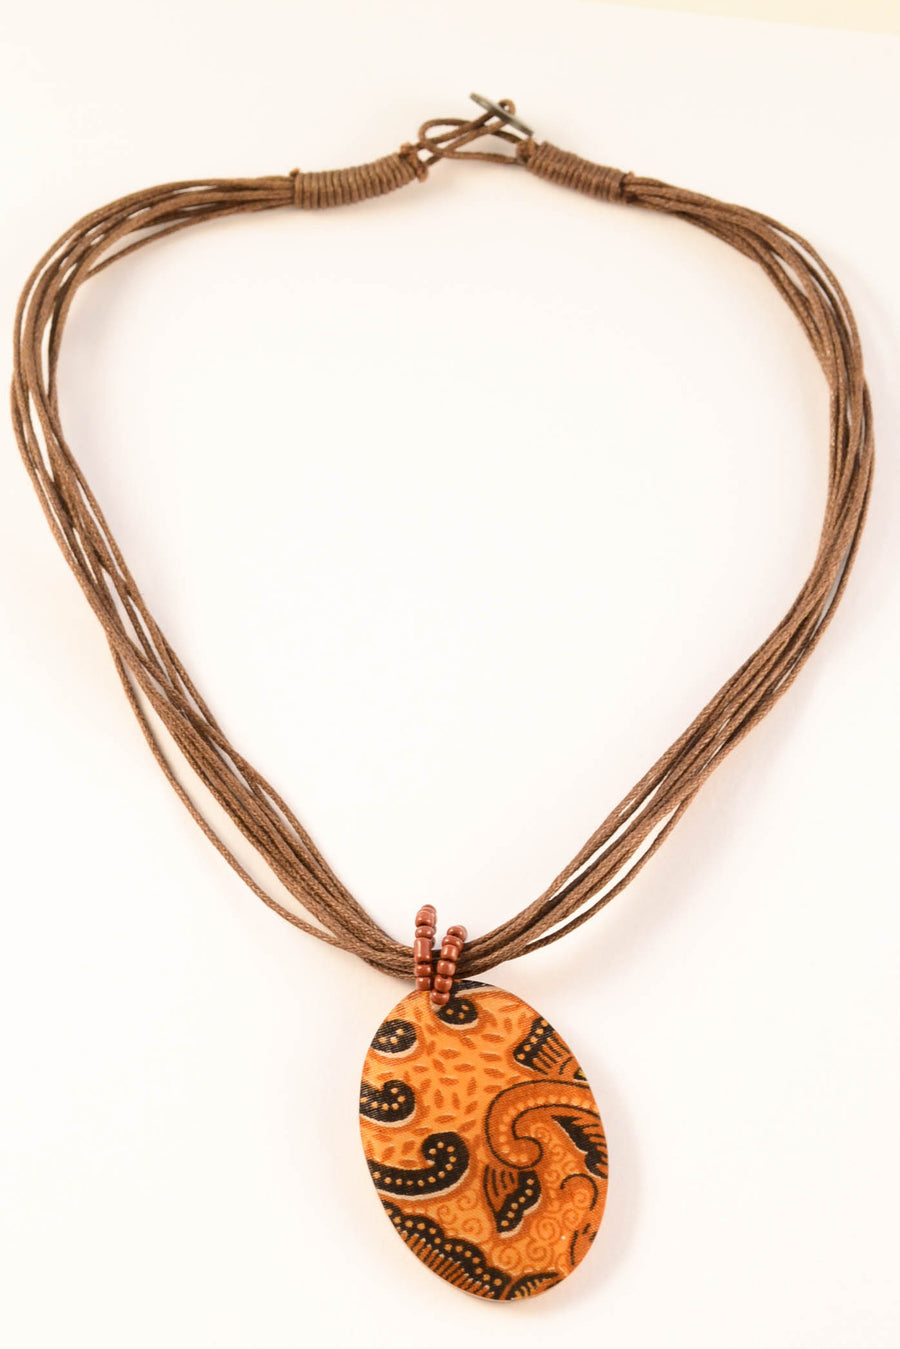 Batik Necklace - Large Oval